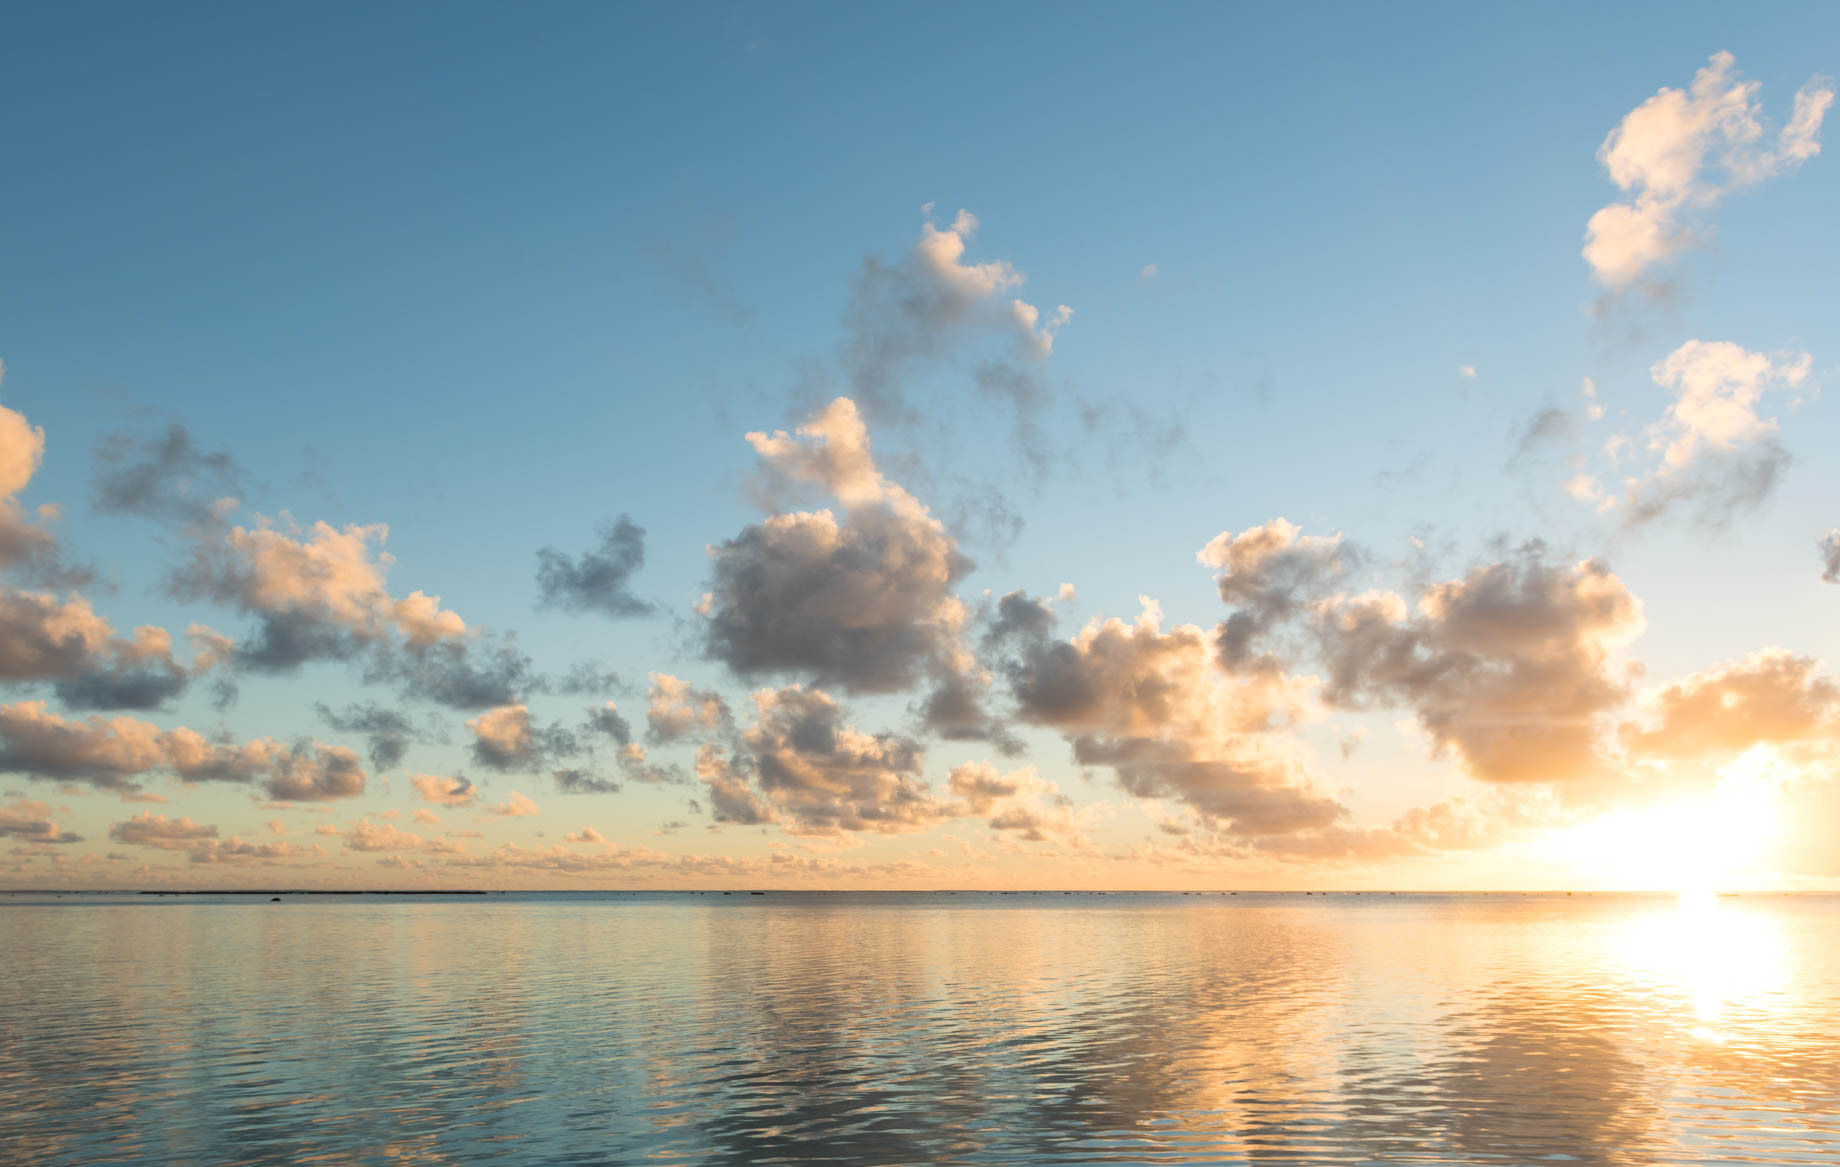 The Brando Resort - Tetiaroa Private Island, French Polynesia - Tropical Ocean Sunset